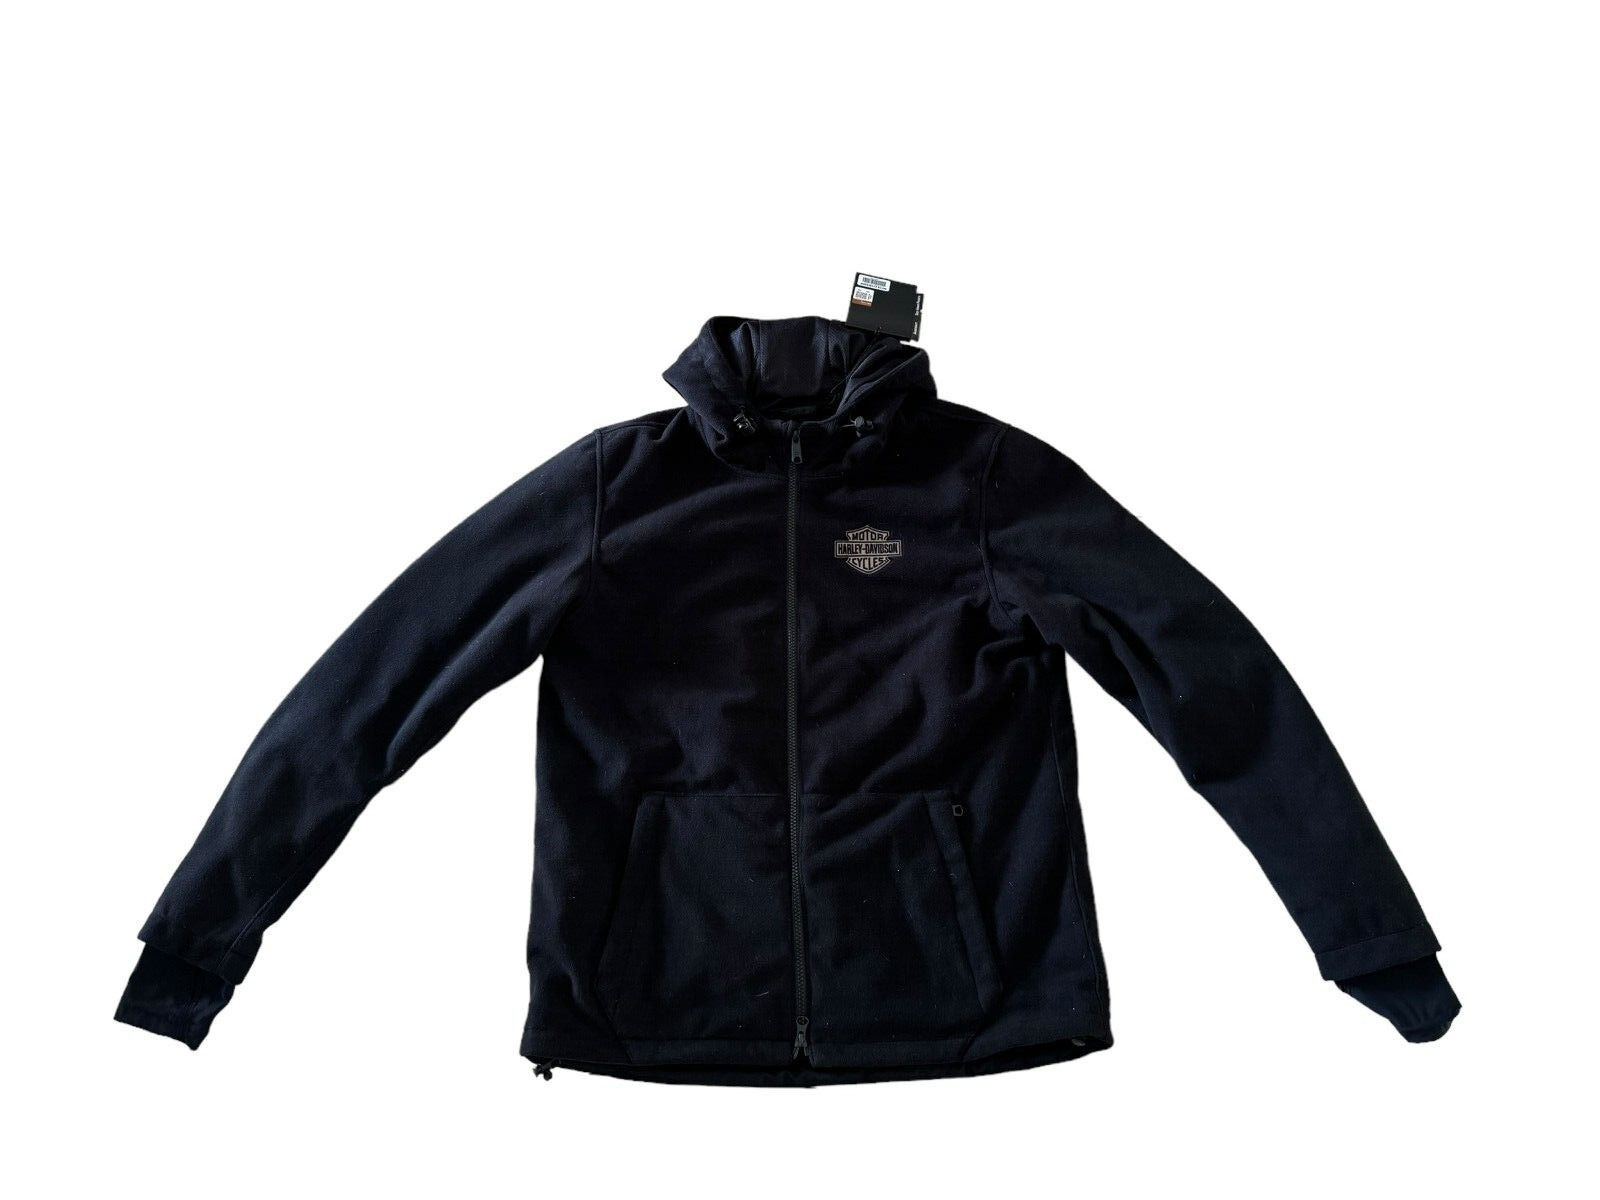 Harley Davisdon Jacket Roadway II textile Black. Size Medium. New With Tags